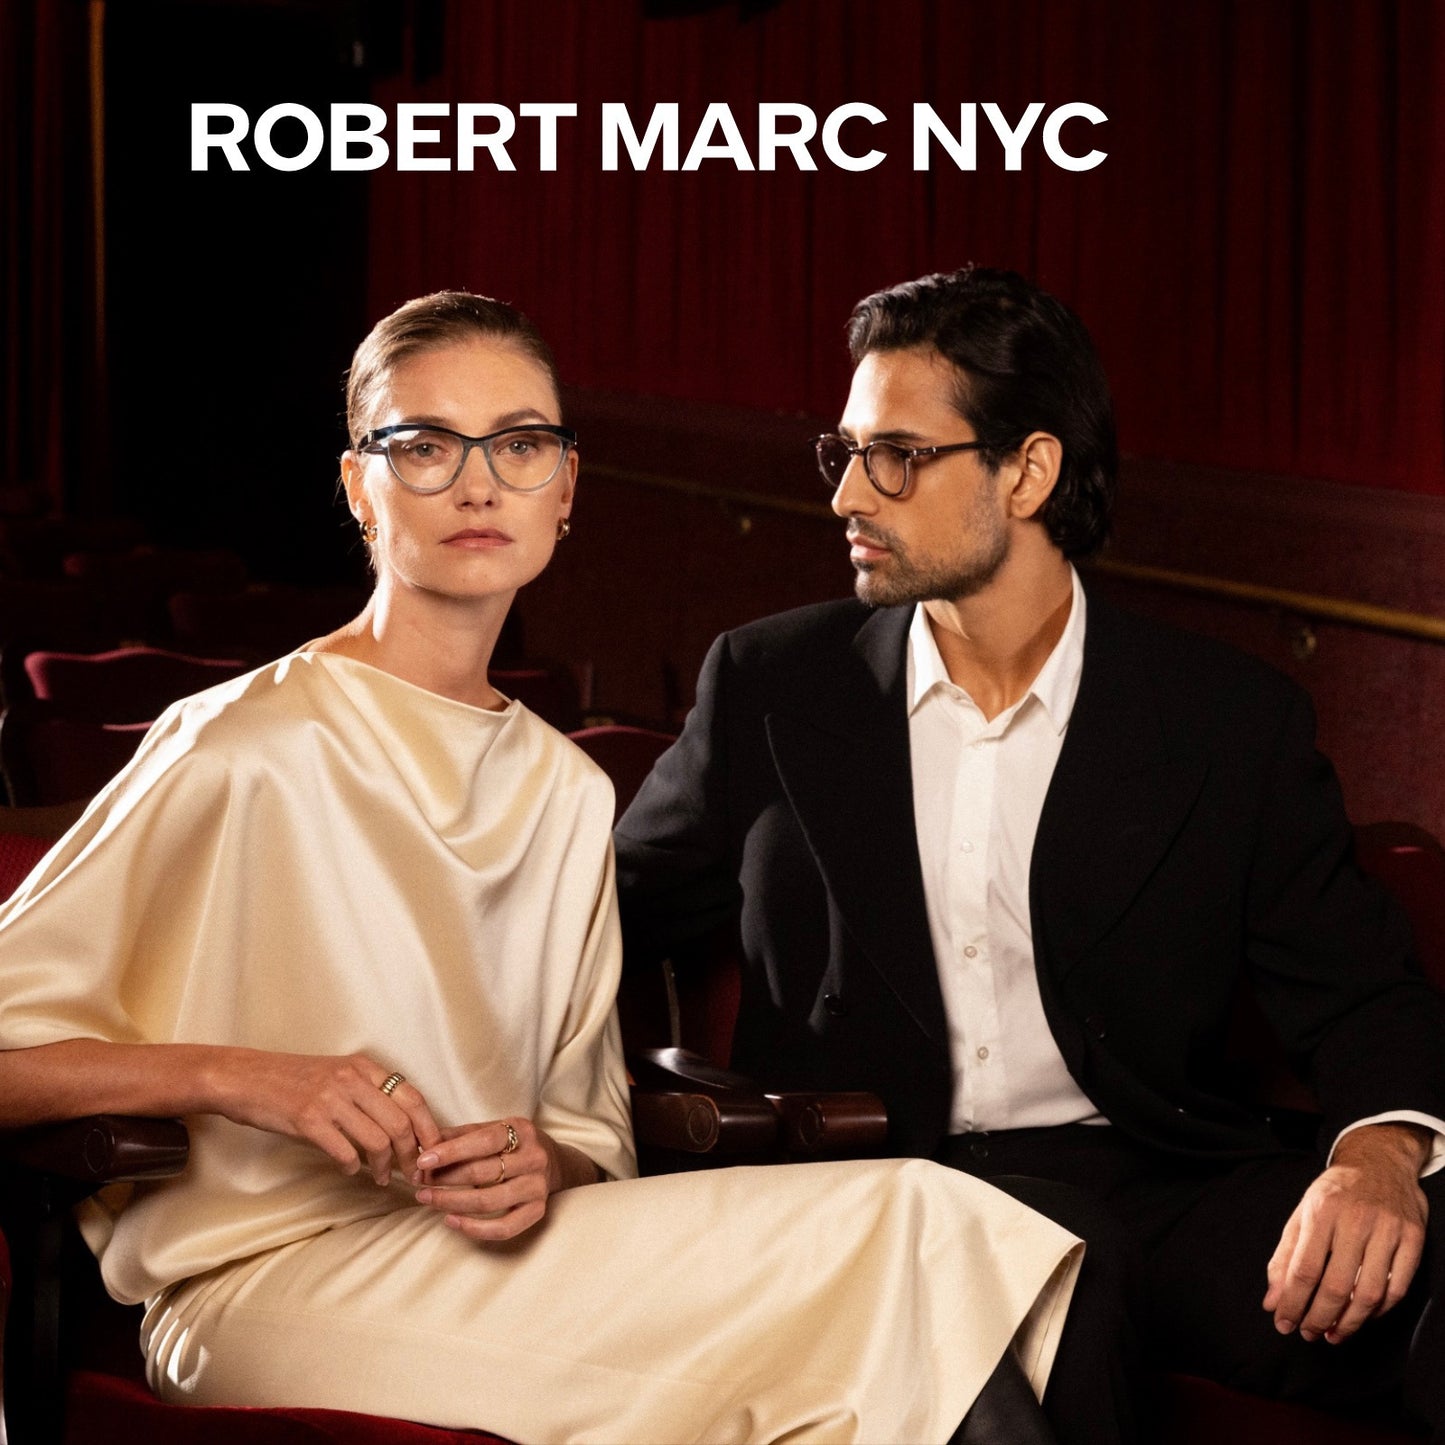 Robert Marc NYC